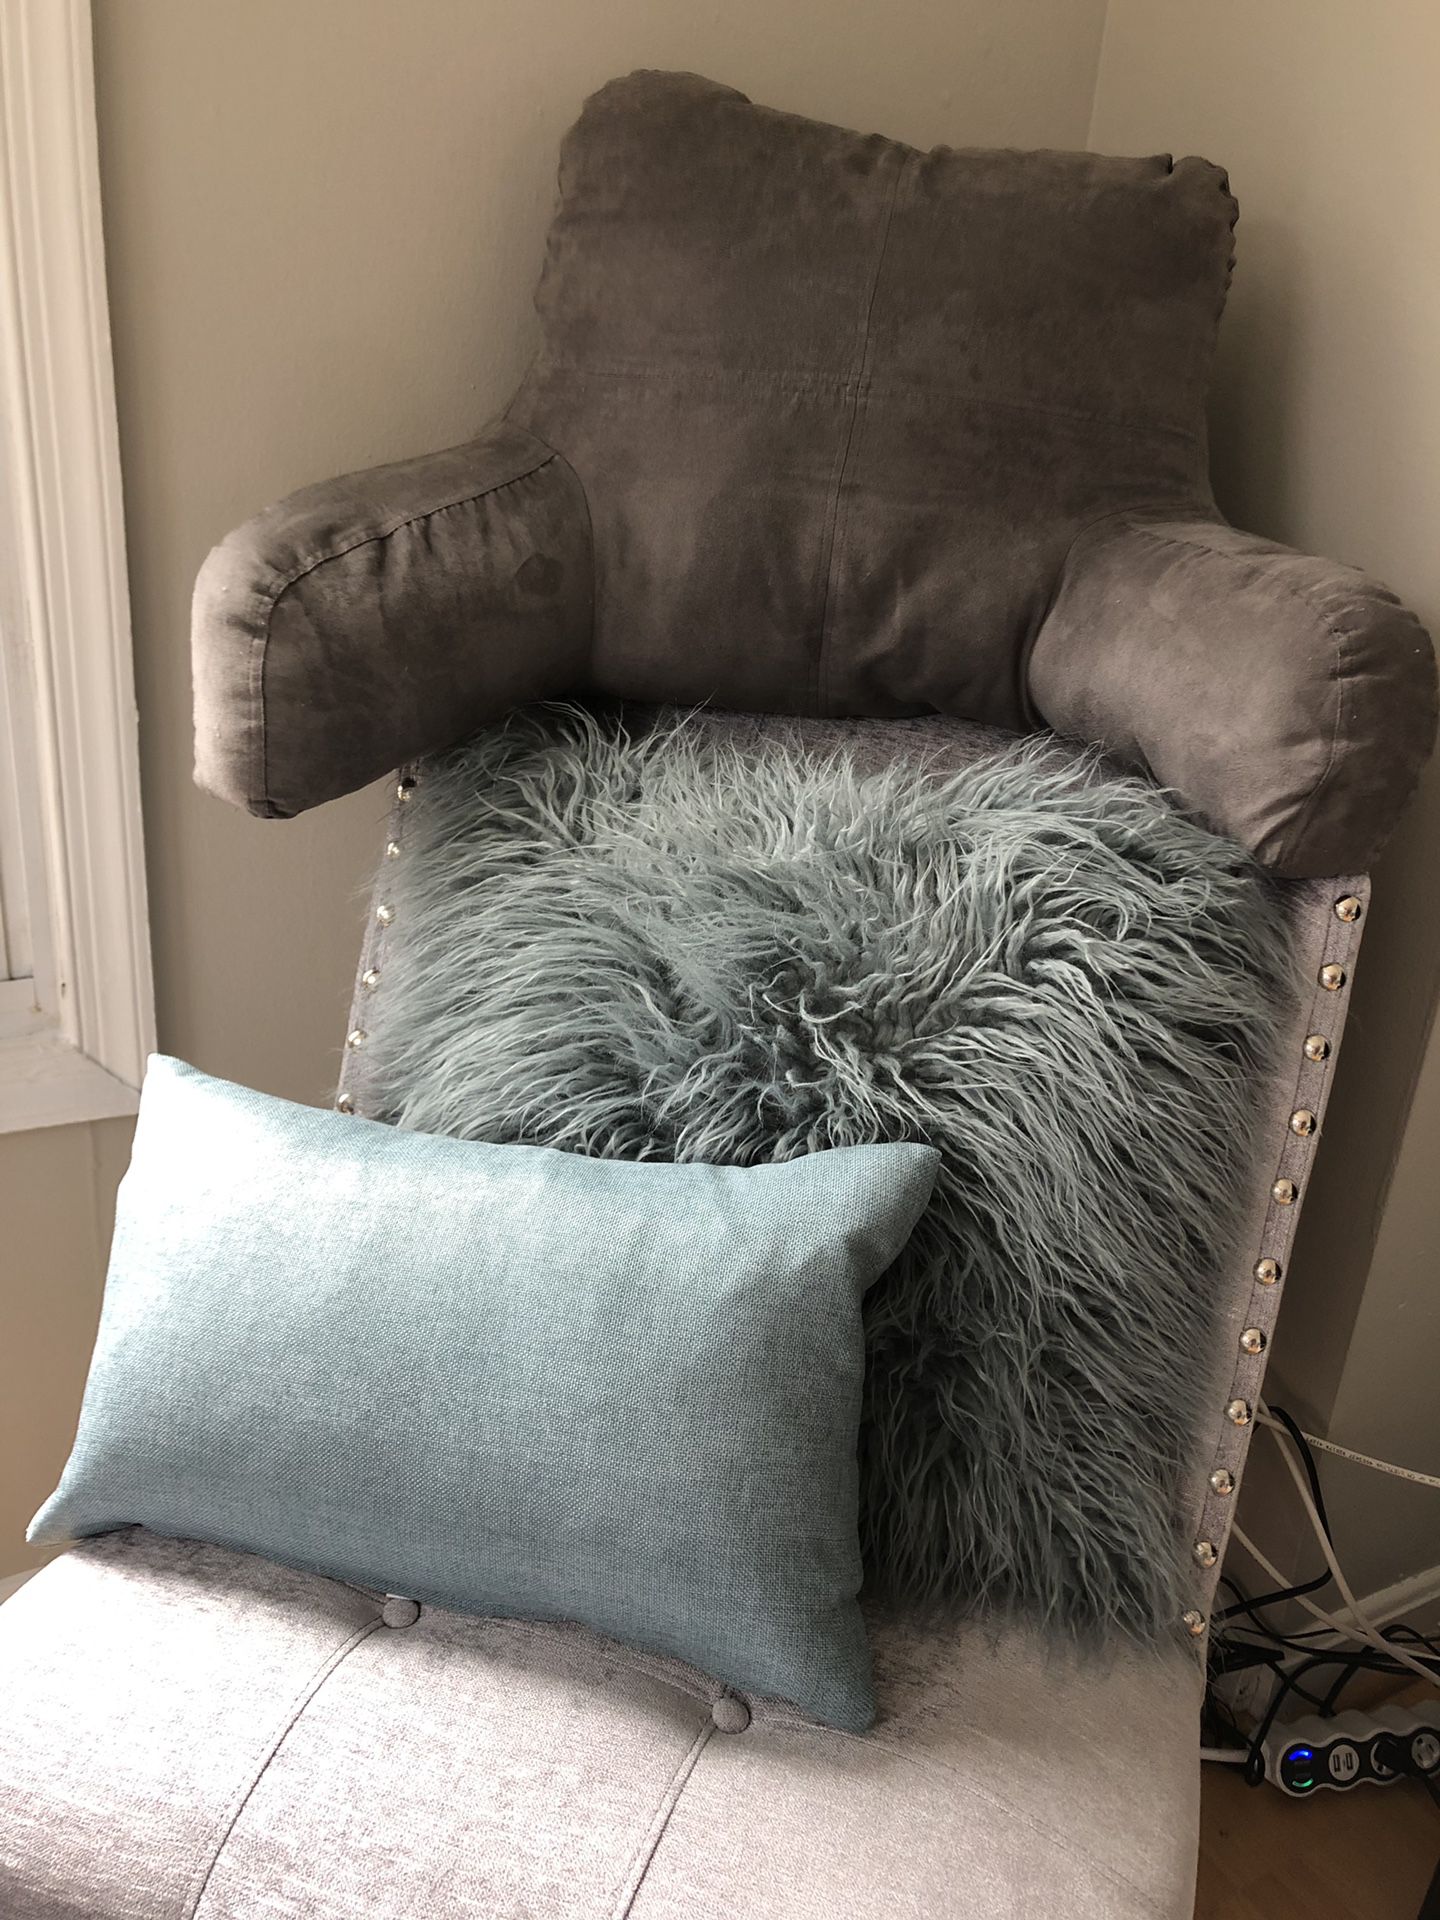 2 decorative pillows and a backrest pillow